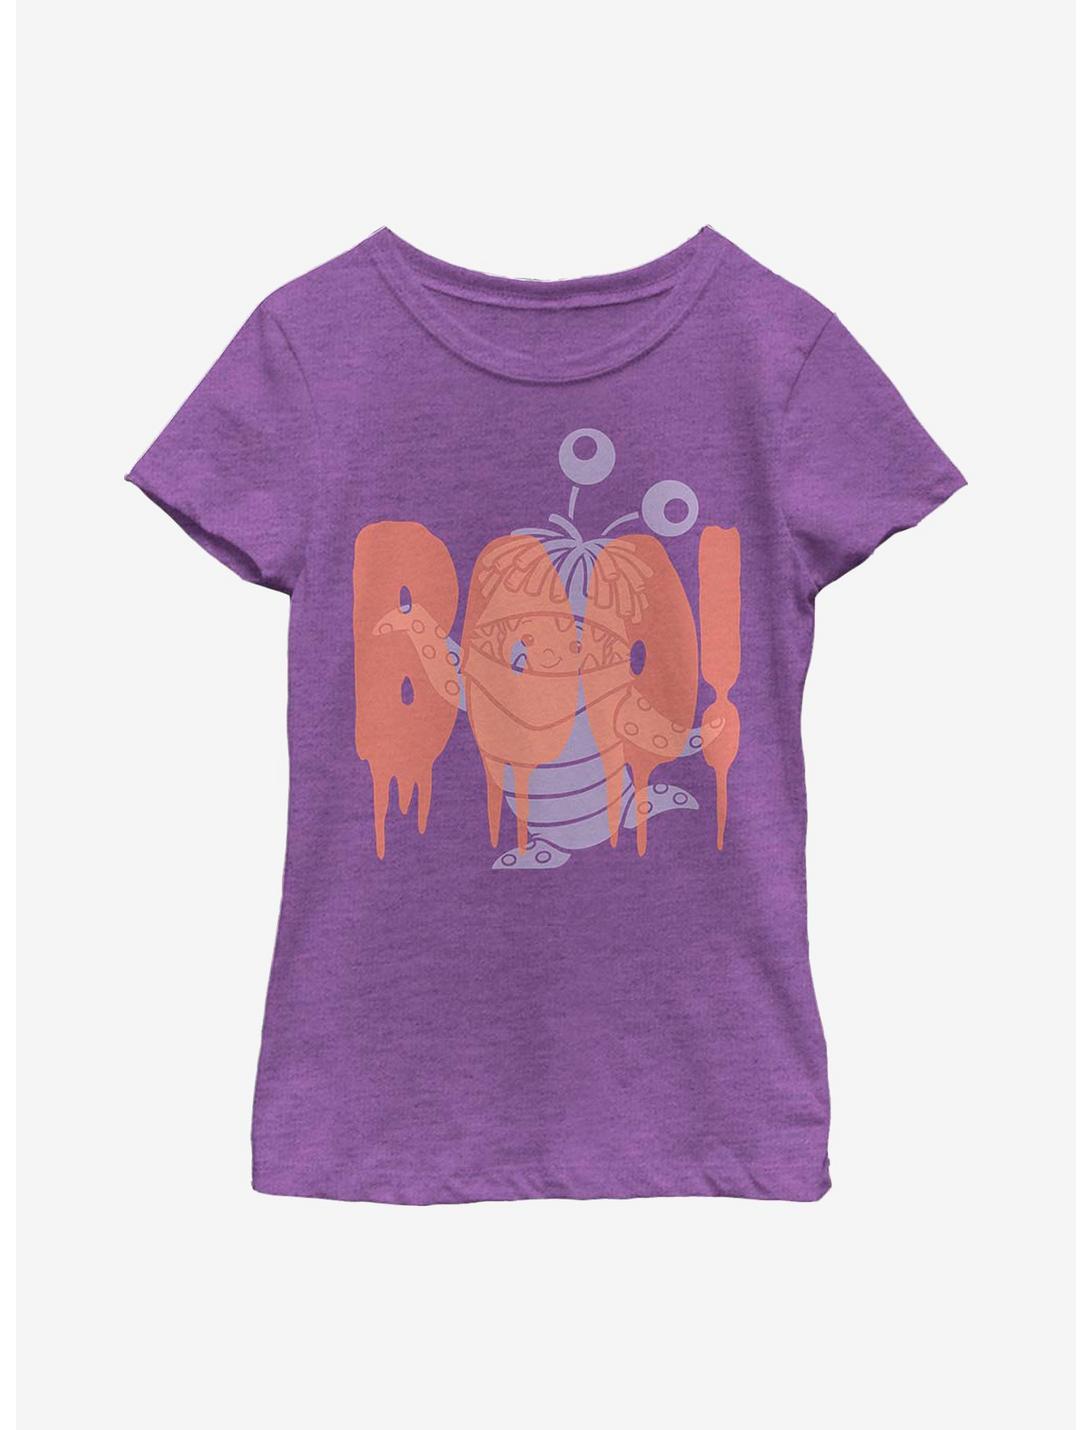 Disney Pixar Monsters University Spooky Boo Youth Girls T-Shirt, PURPLE BERRY, hi-res